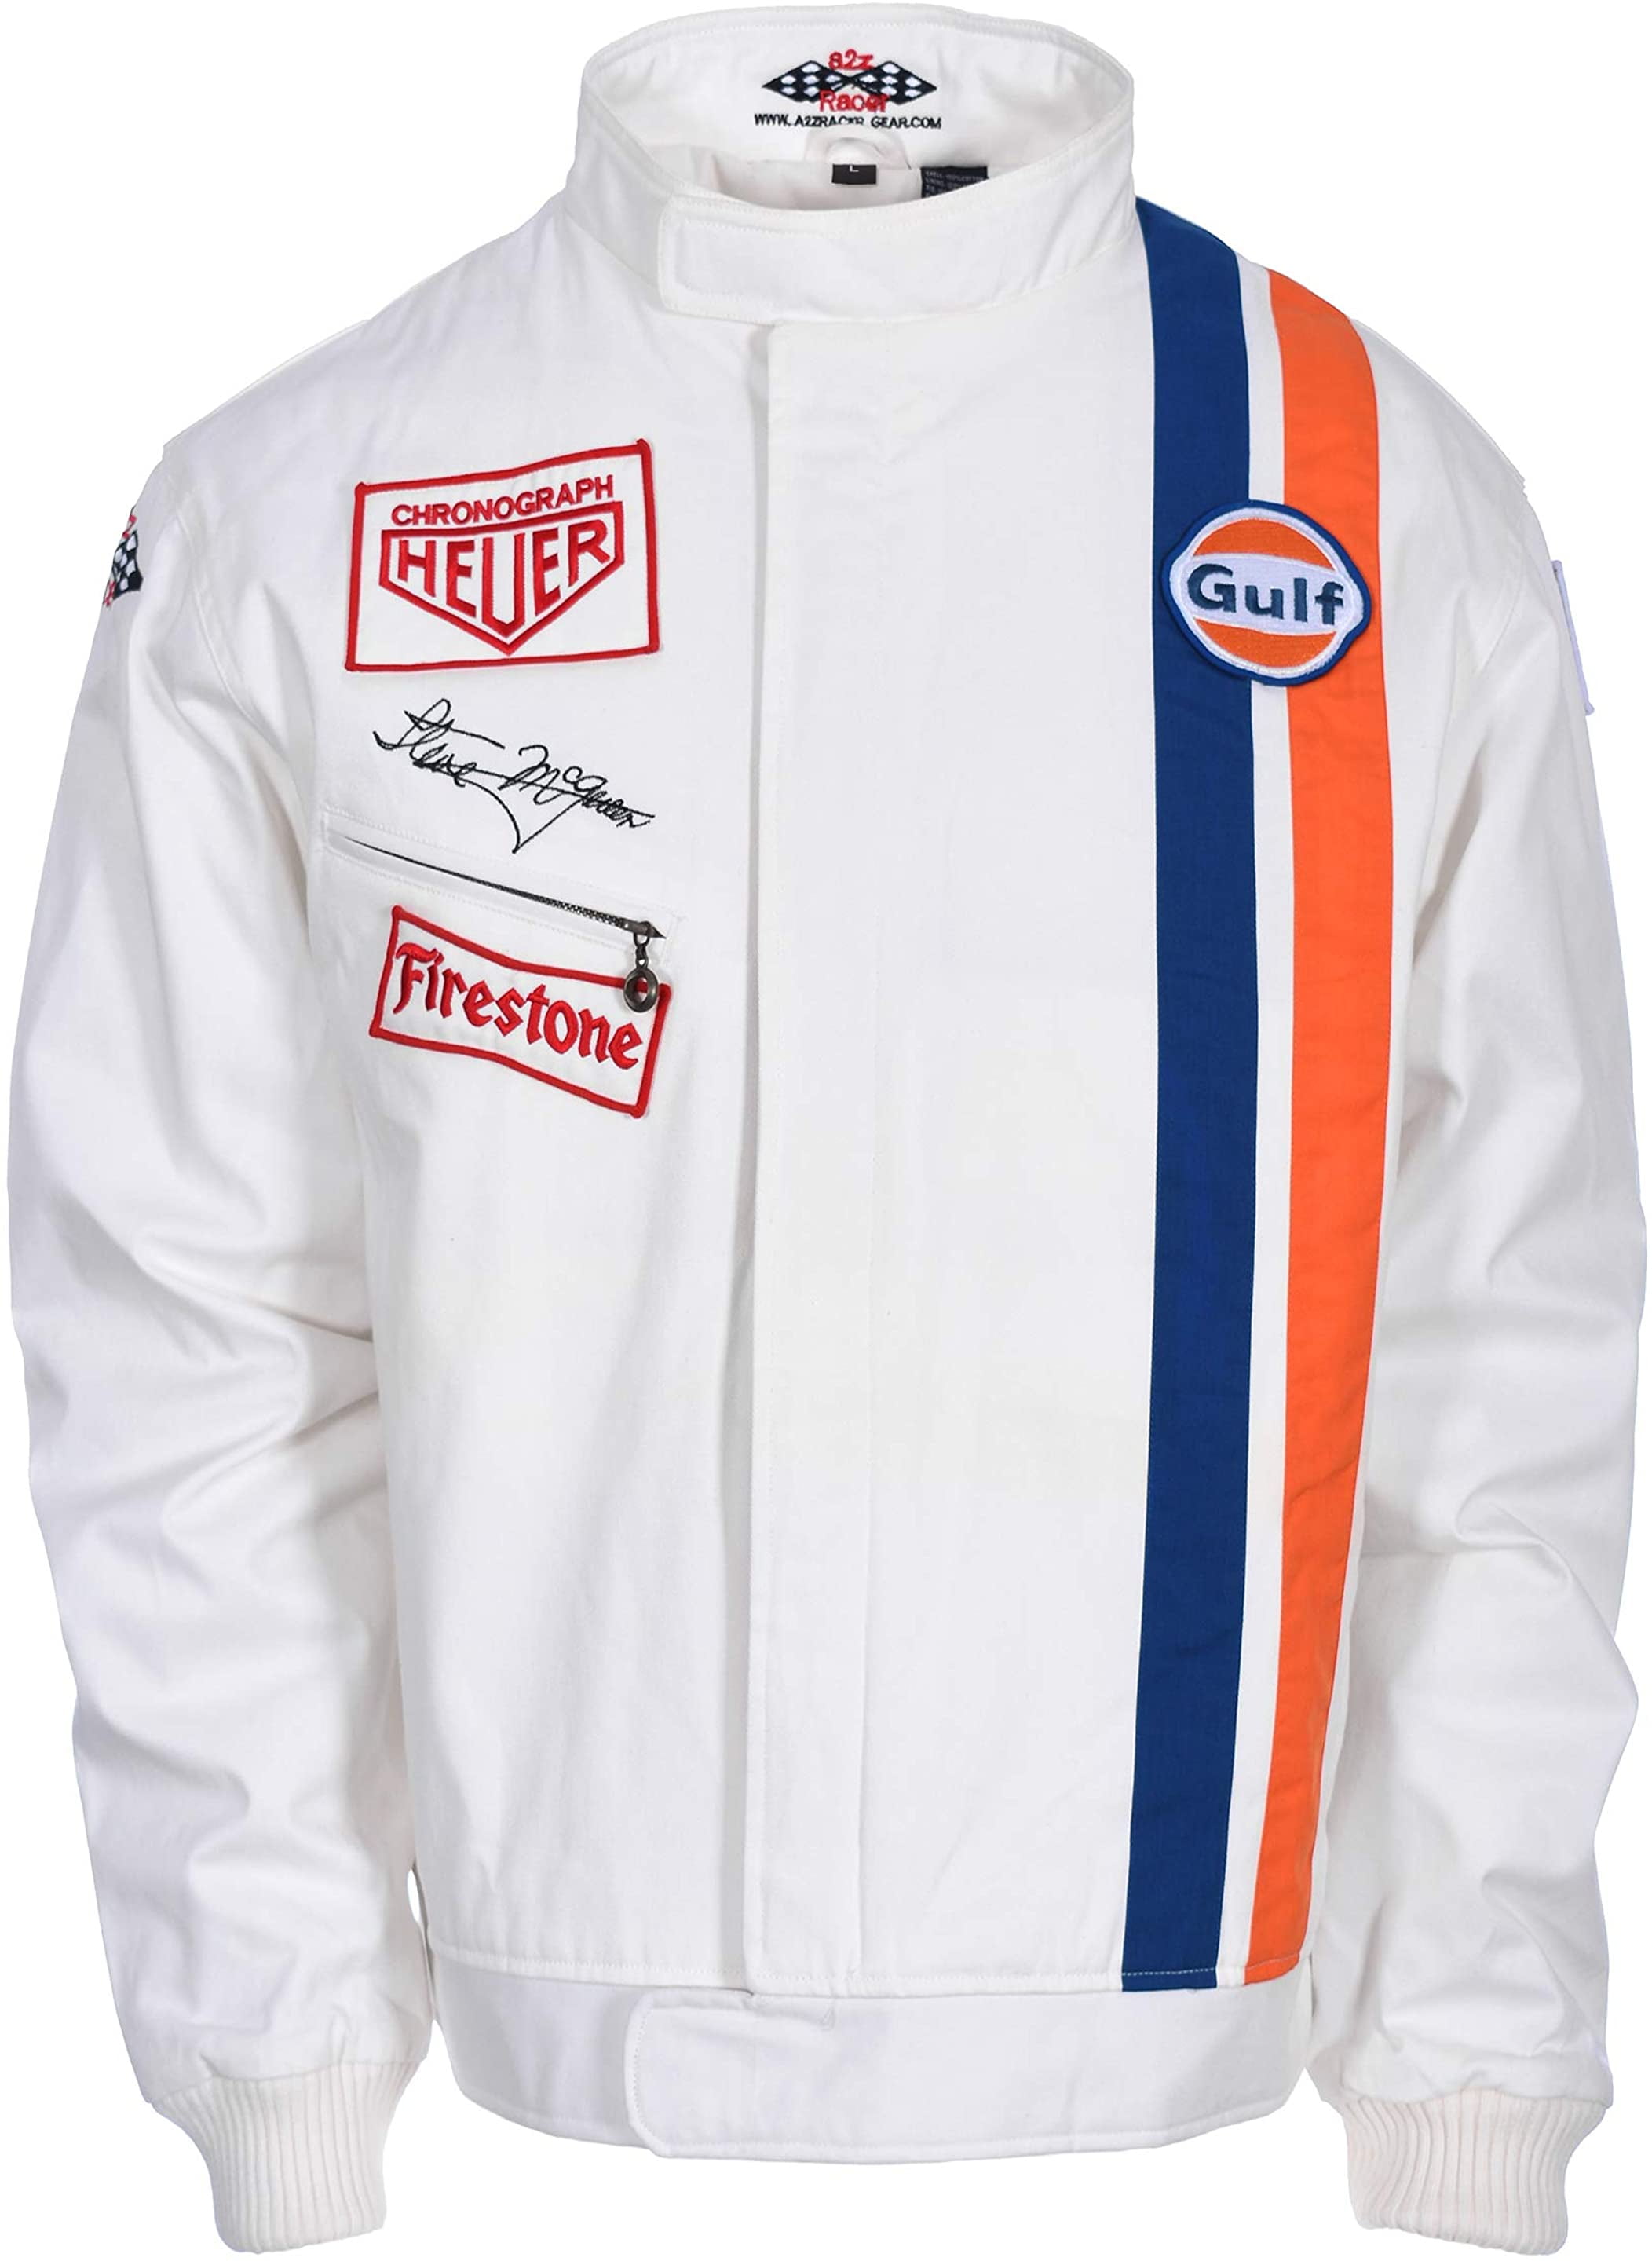 Steve McQueen Gulf Le White Cordura Cotton Jacket For Men Biker Racer Outerwear 